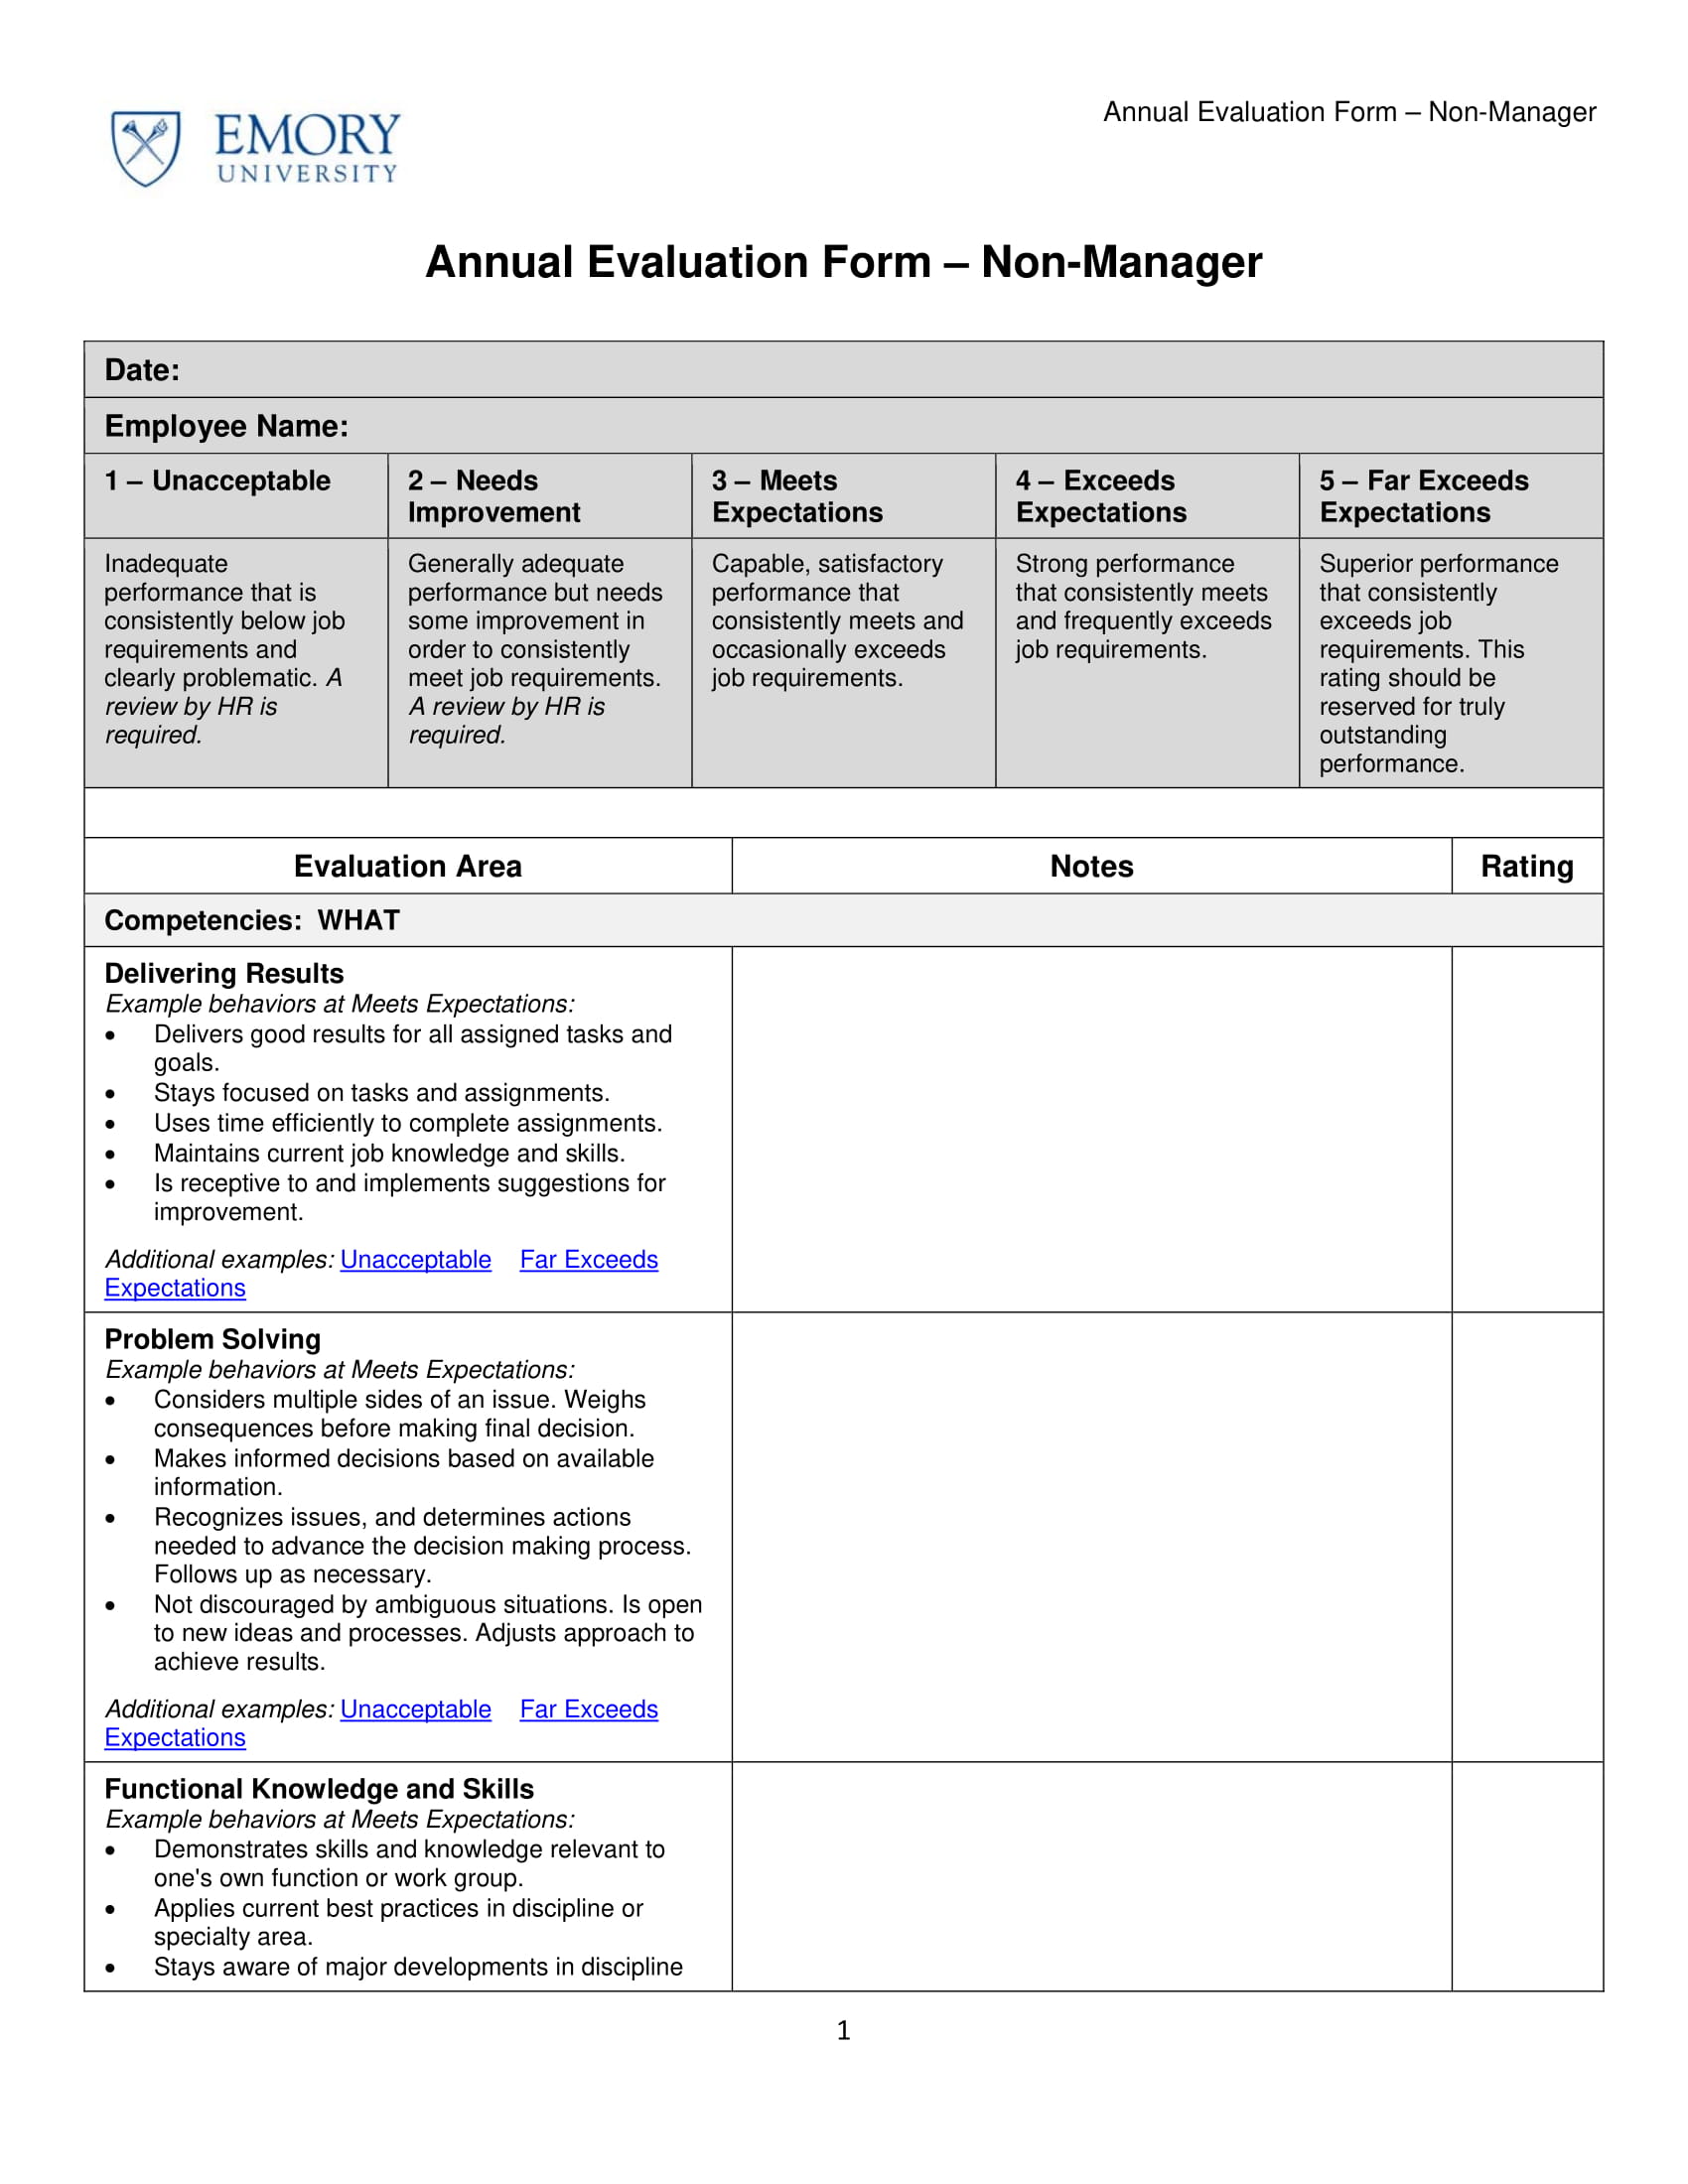 New Employee Sample Form Employeeform Net Medical Staff Evaluation Vrogue